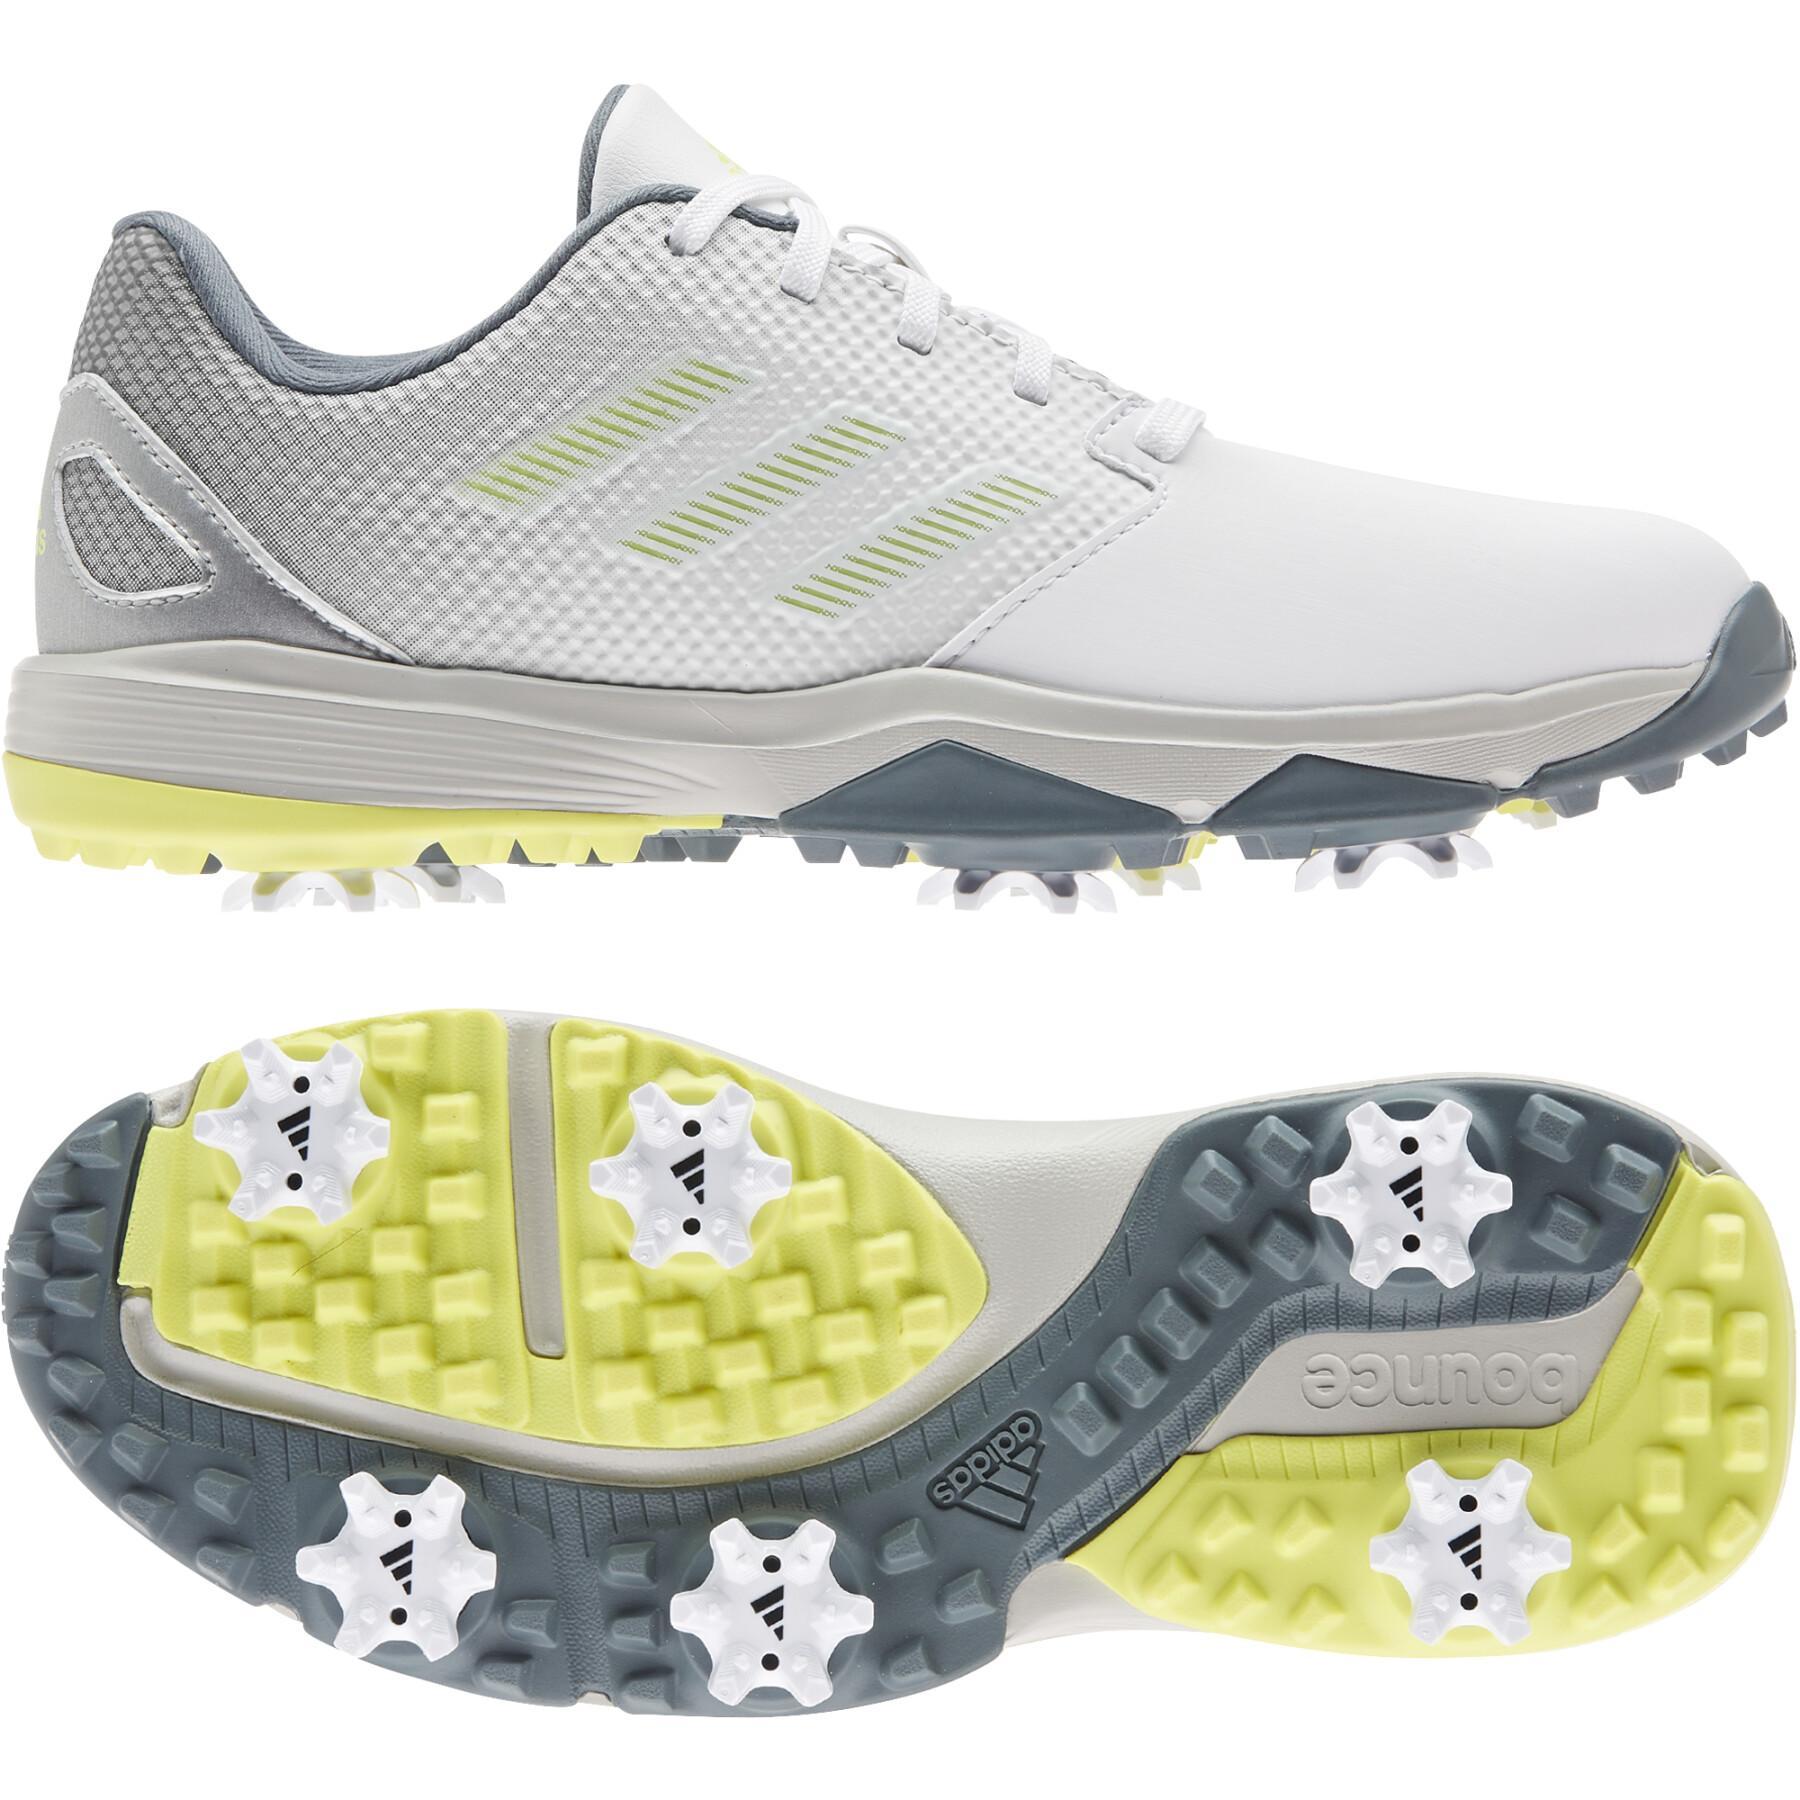 Children's golf shoes adidas ZG21